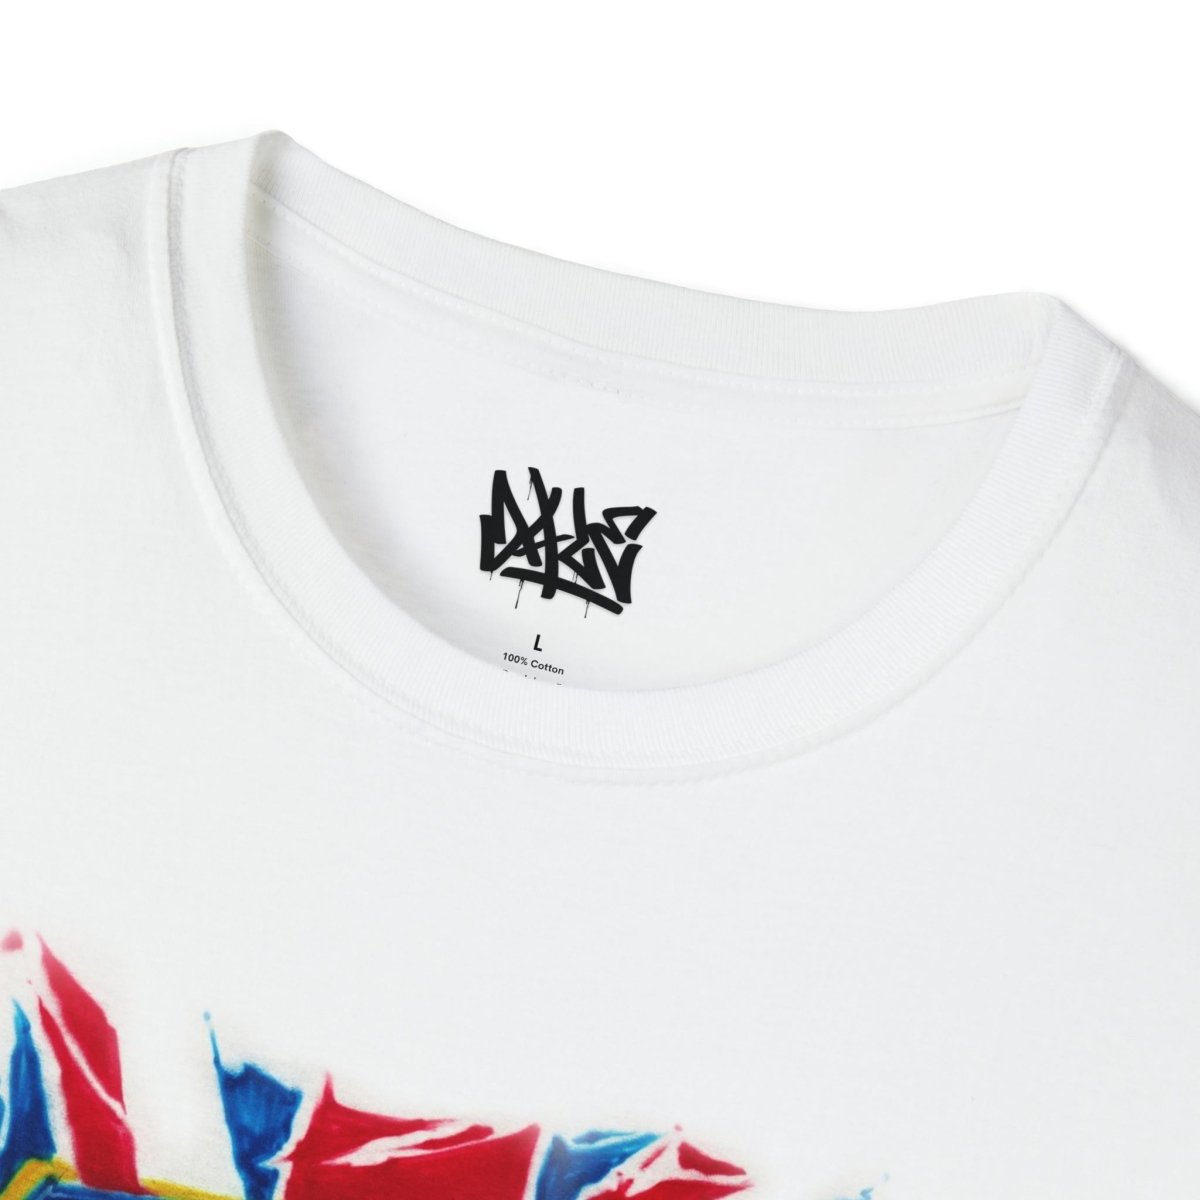 Chelsea FC Graffiti Style Shirt Customizable Airbrush T shirt Design from Airbrush Customs x Dale The Airbrush Guy